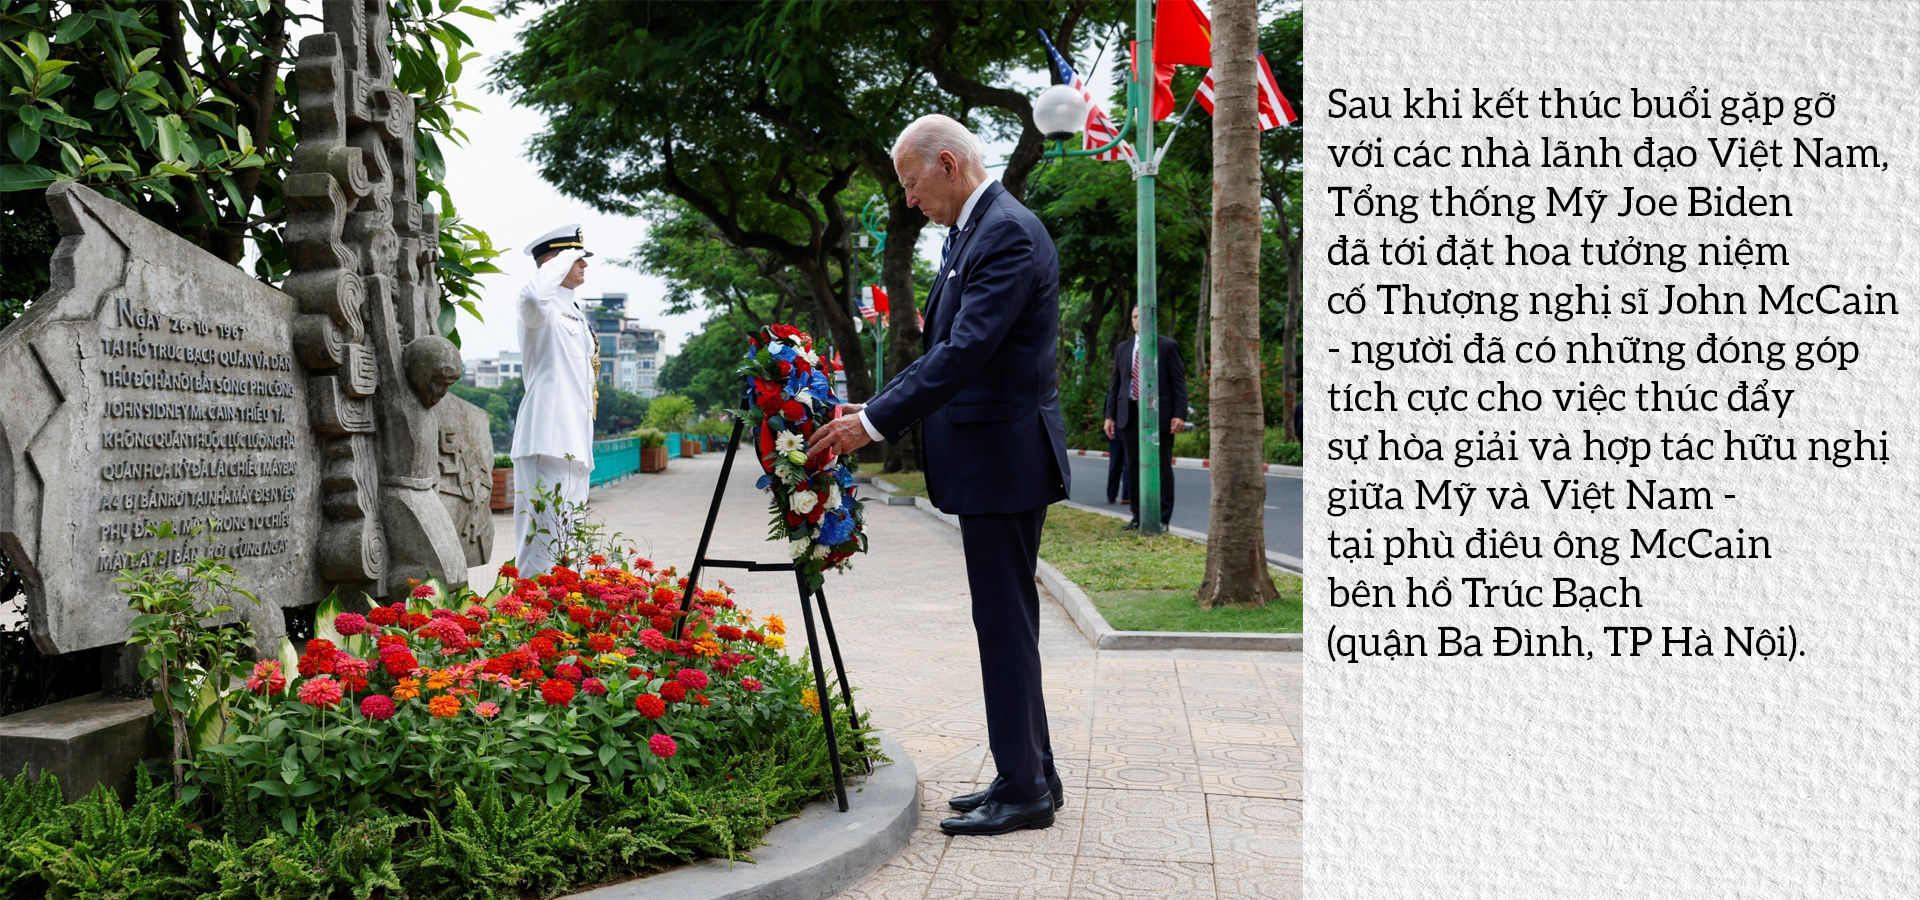 Panorama of the visit of US President Joe Biden - Photo 24.